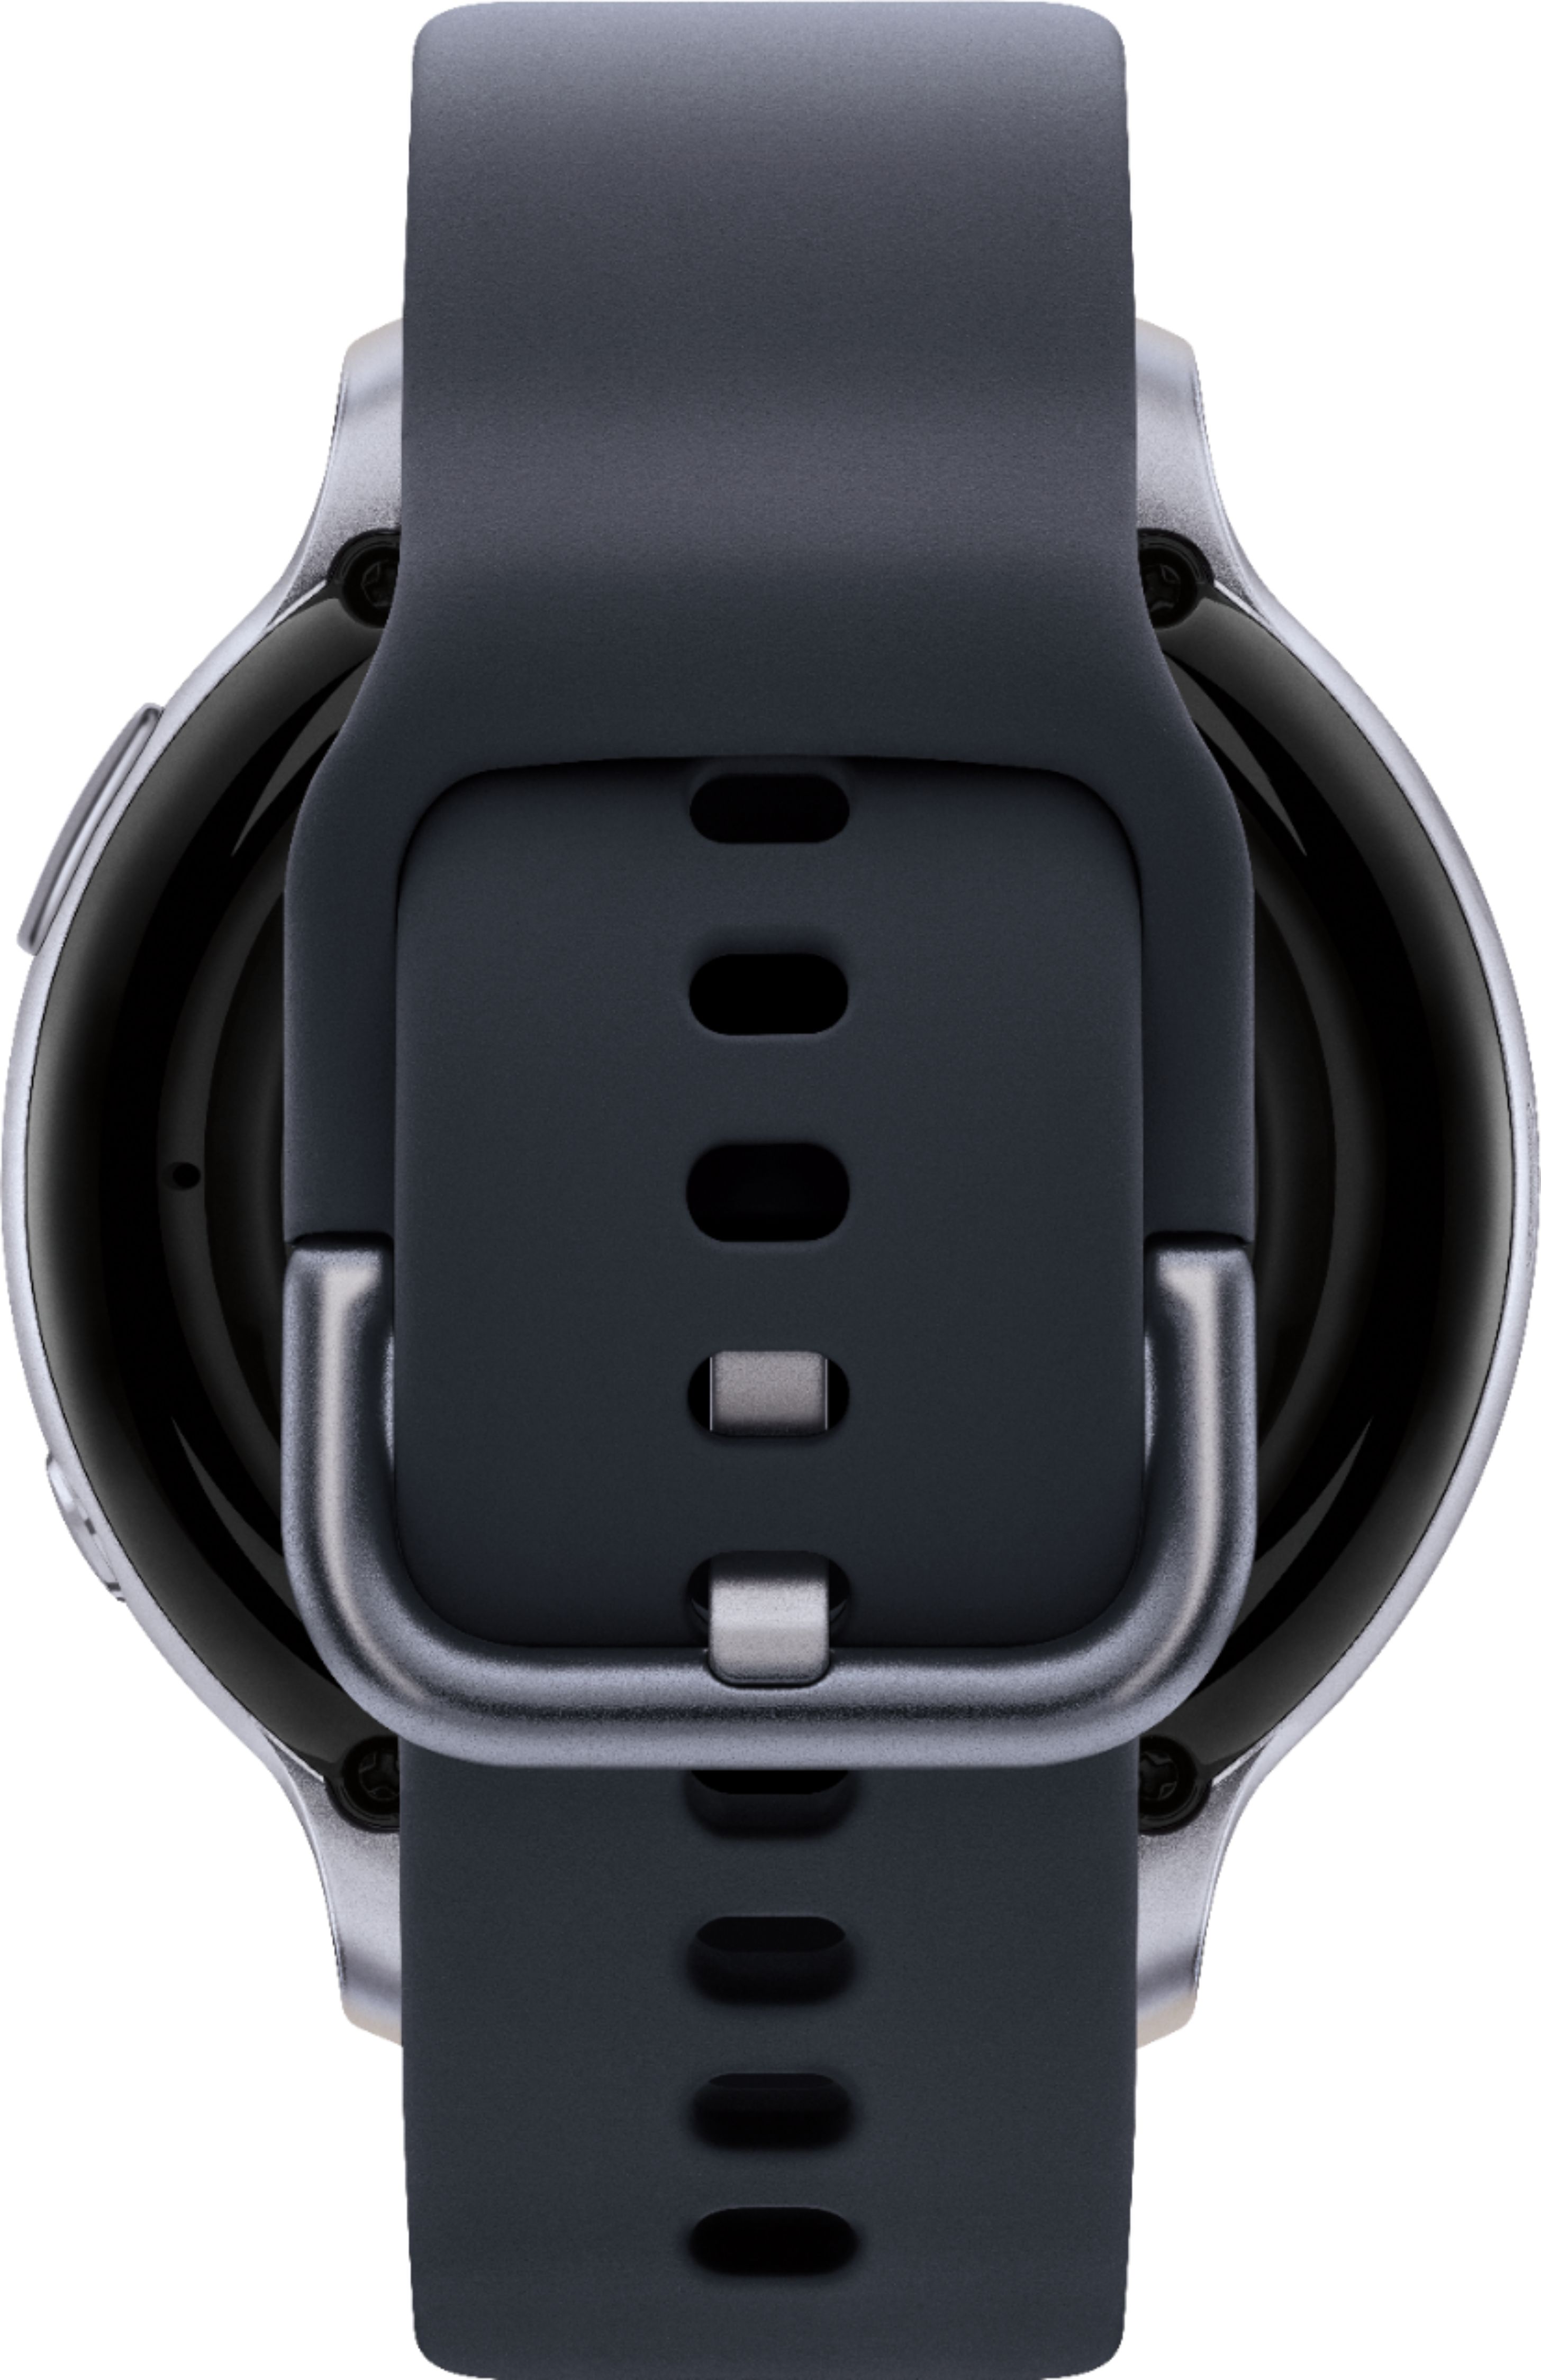 Back View: Samsung - Geek Squad Certified Refurbished Galaxy Watch Active2 Smartwatch 44mm Aluminum - Aqua Black